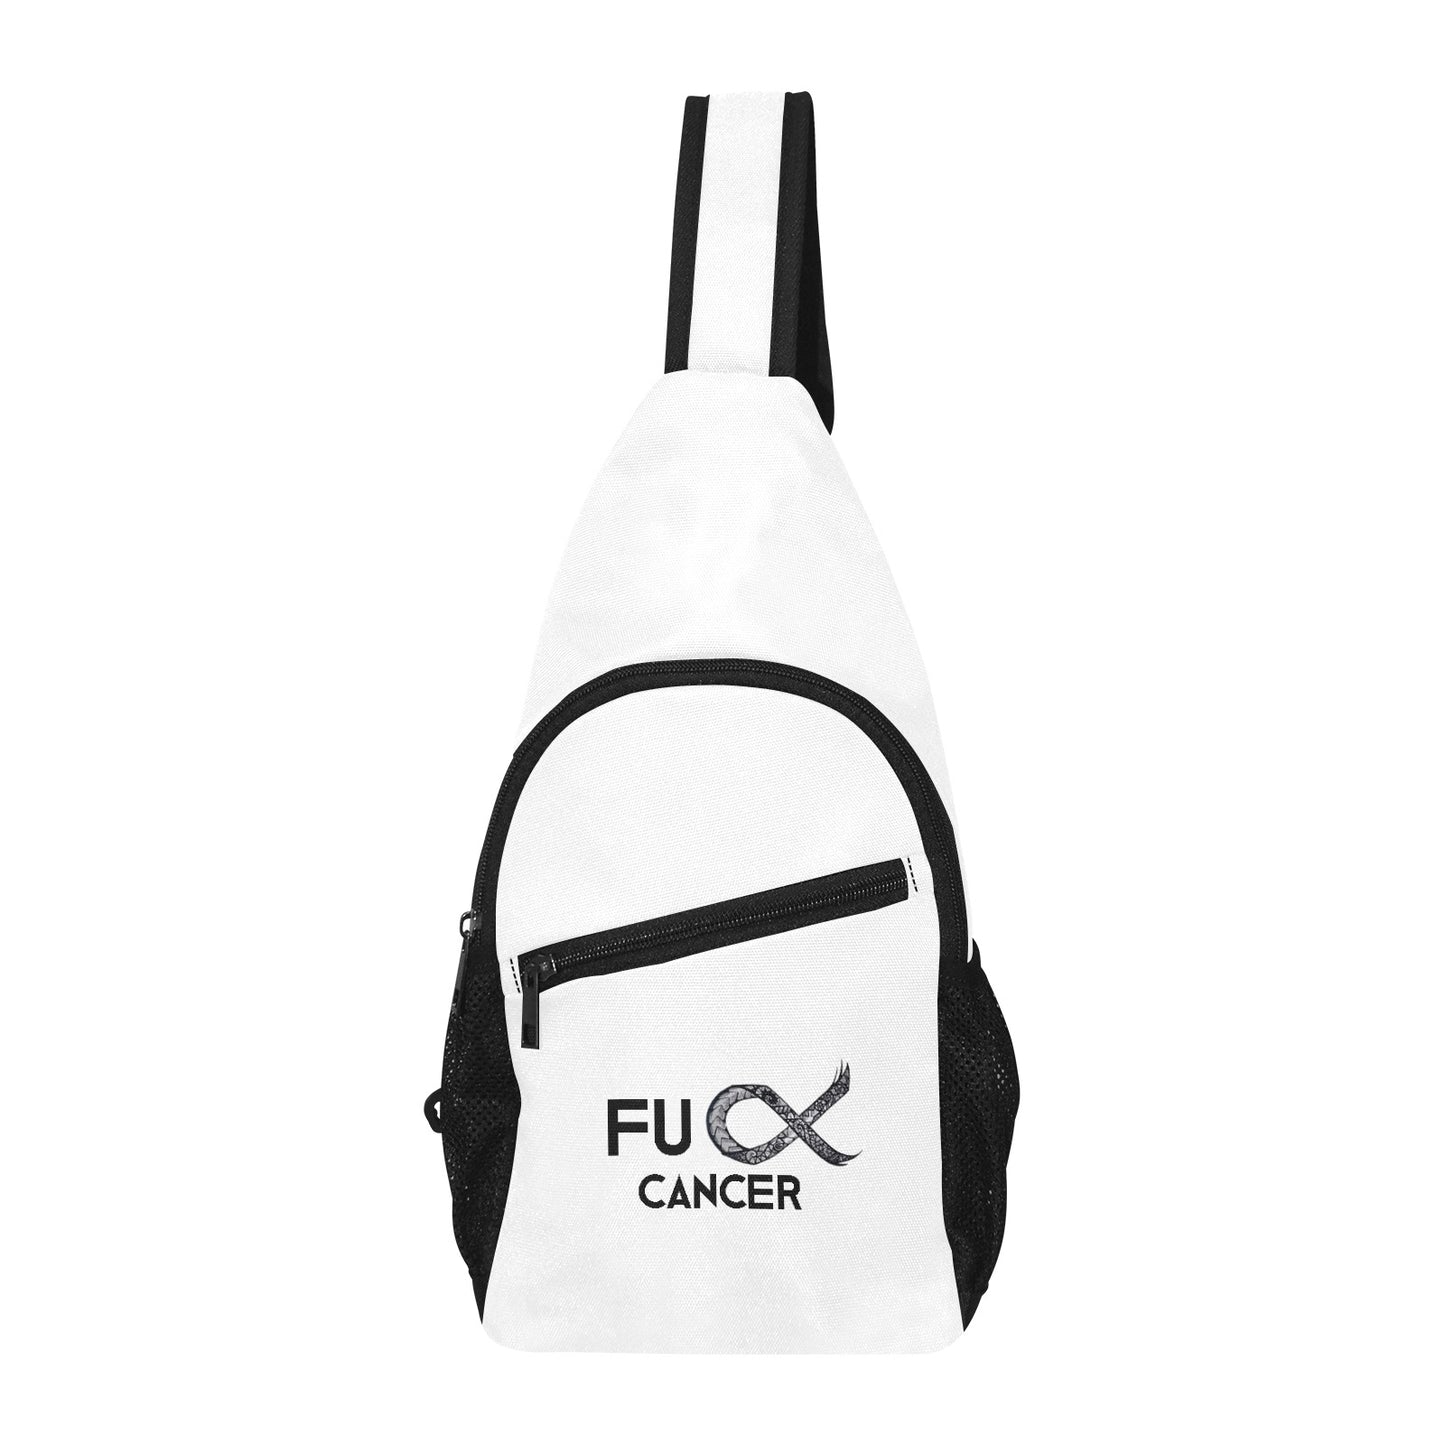 Fuck Cancer Bag